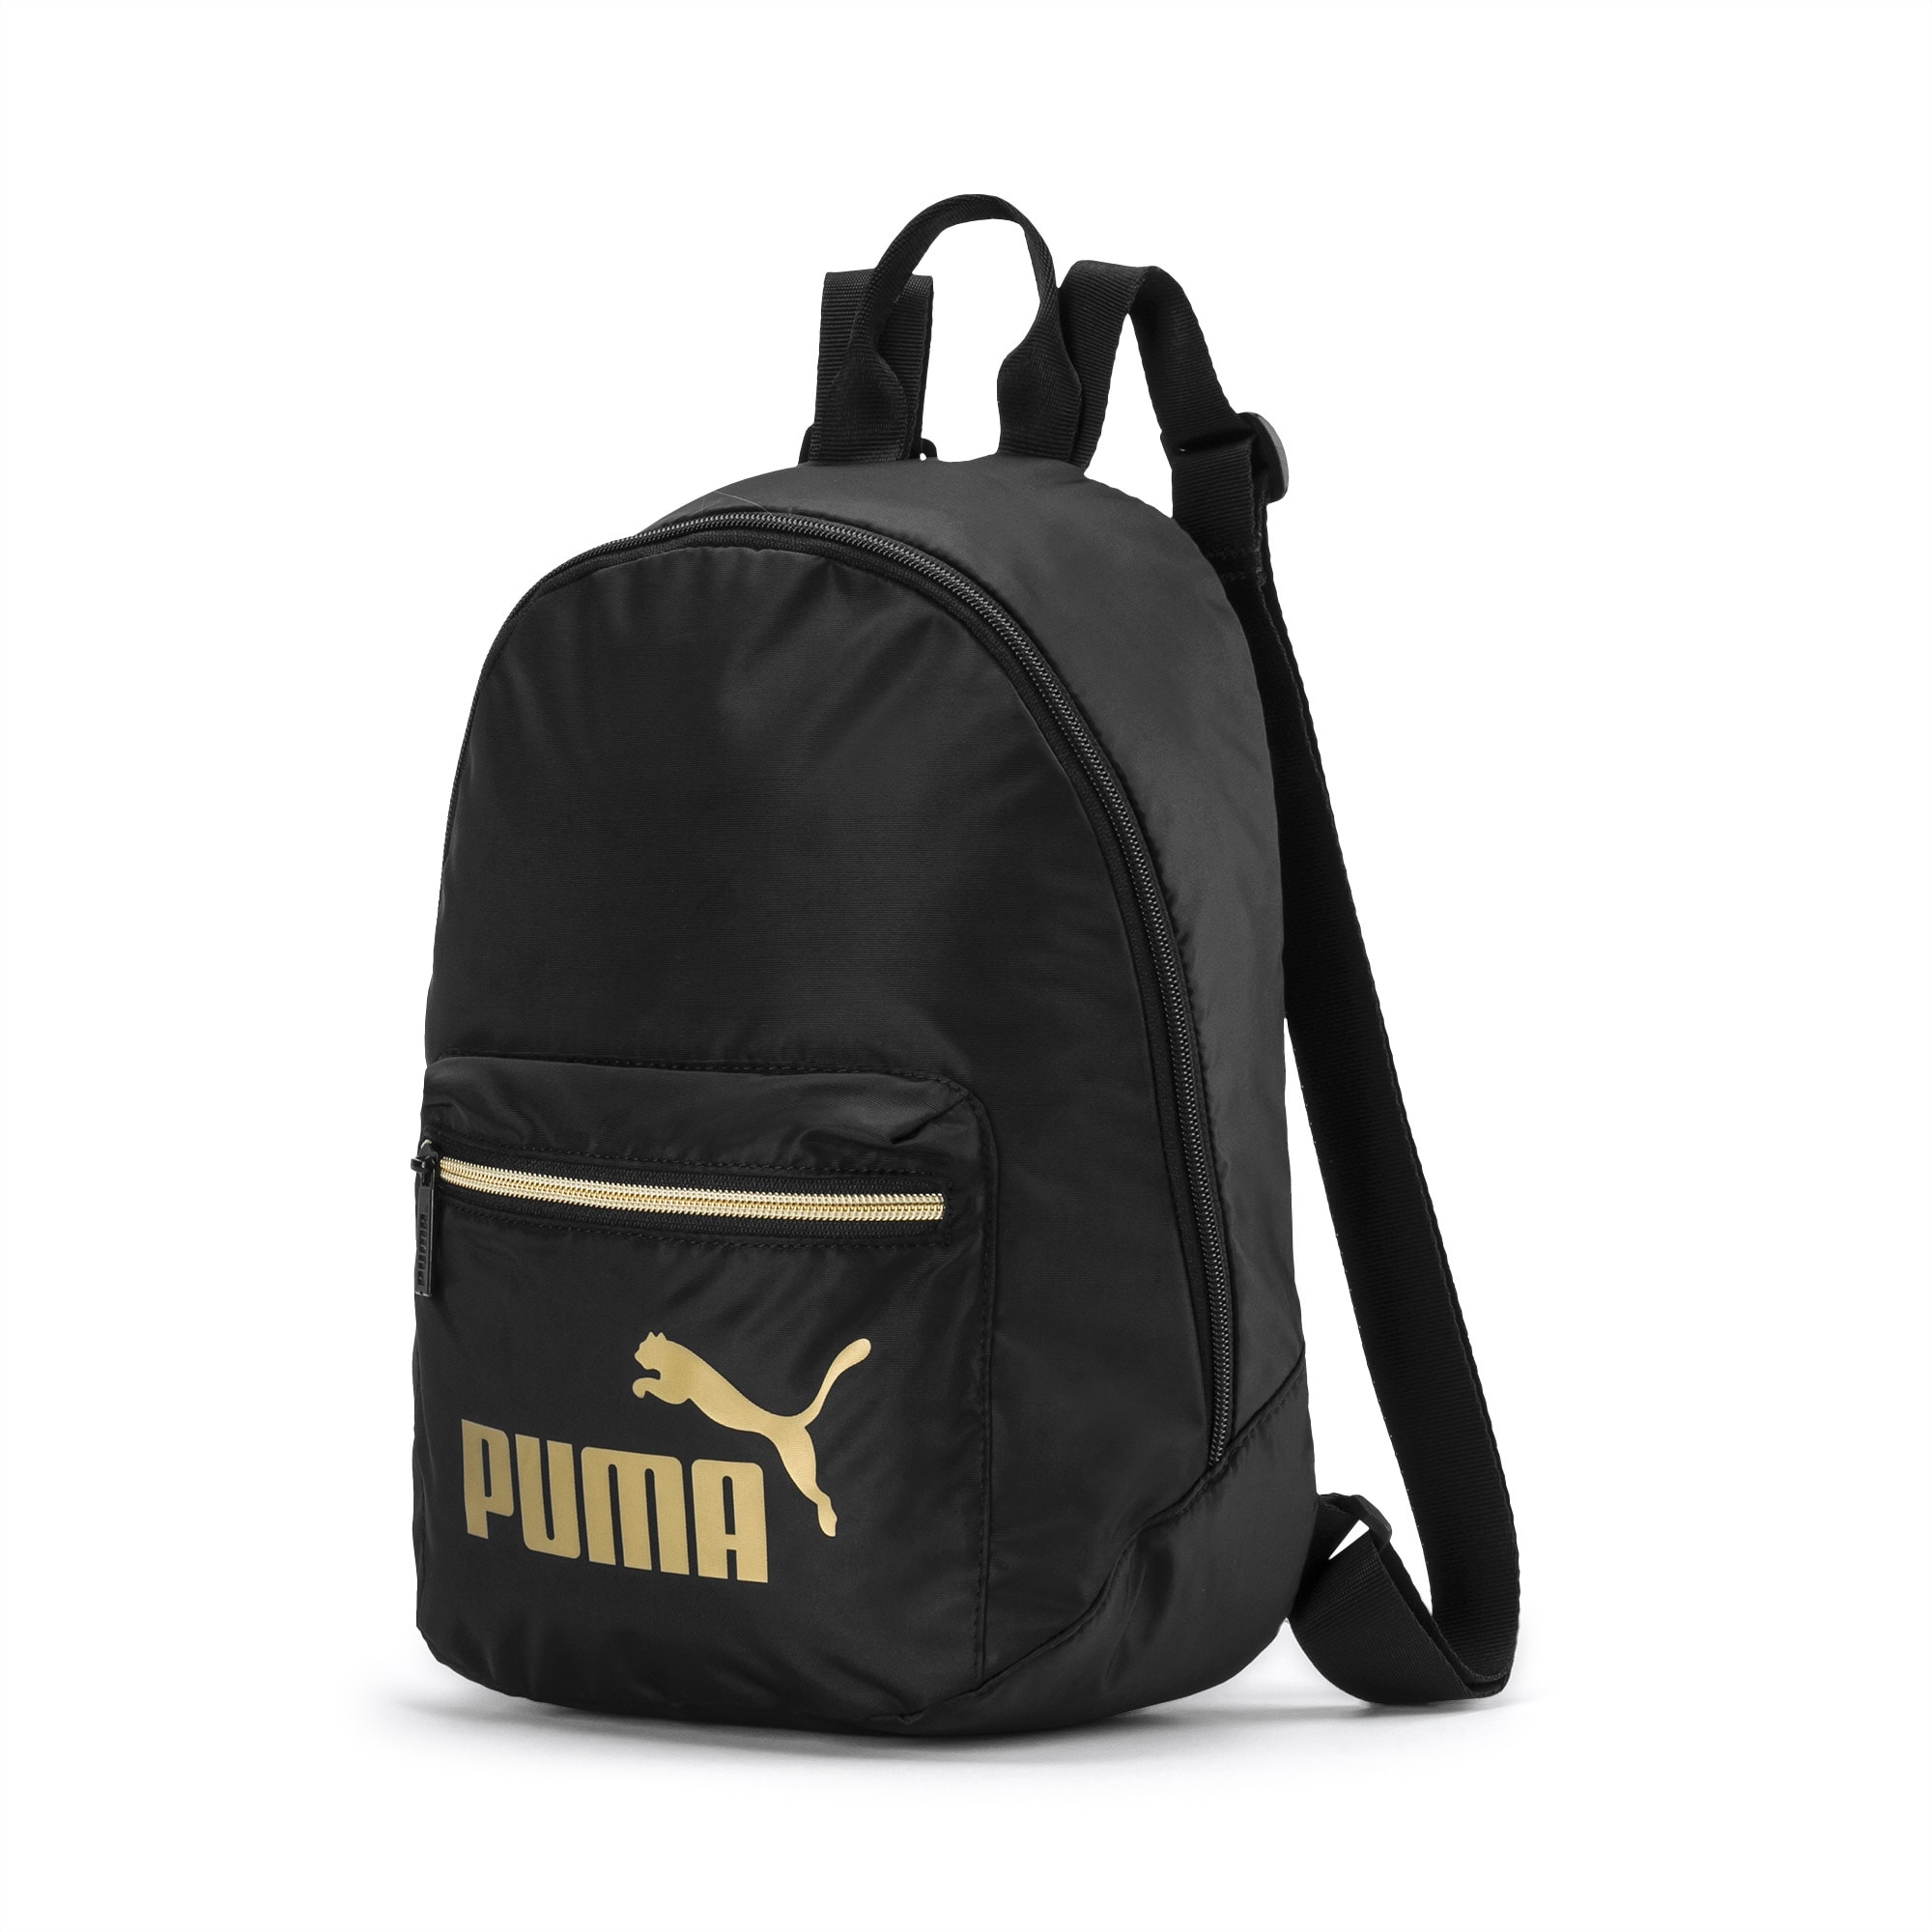 puma black and gold backpack